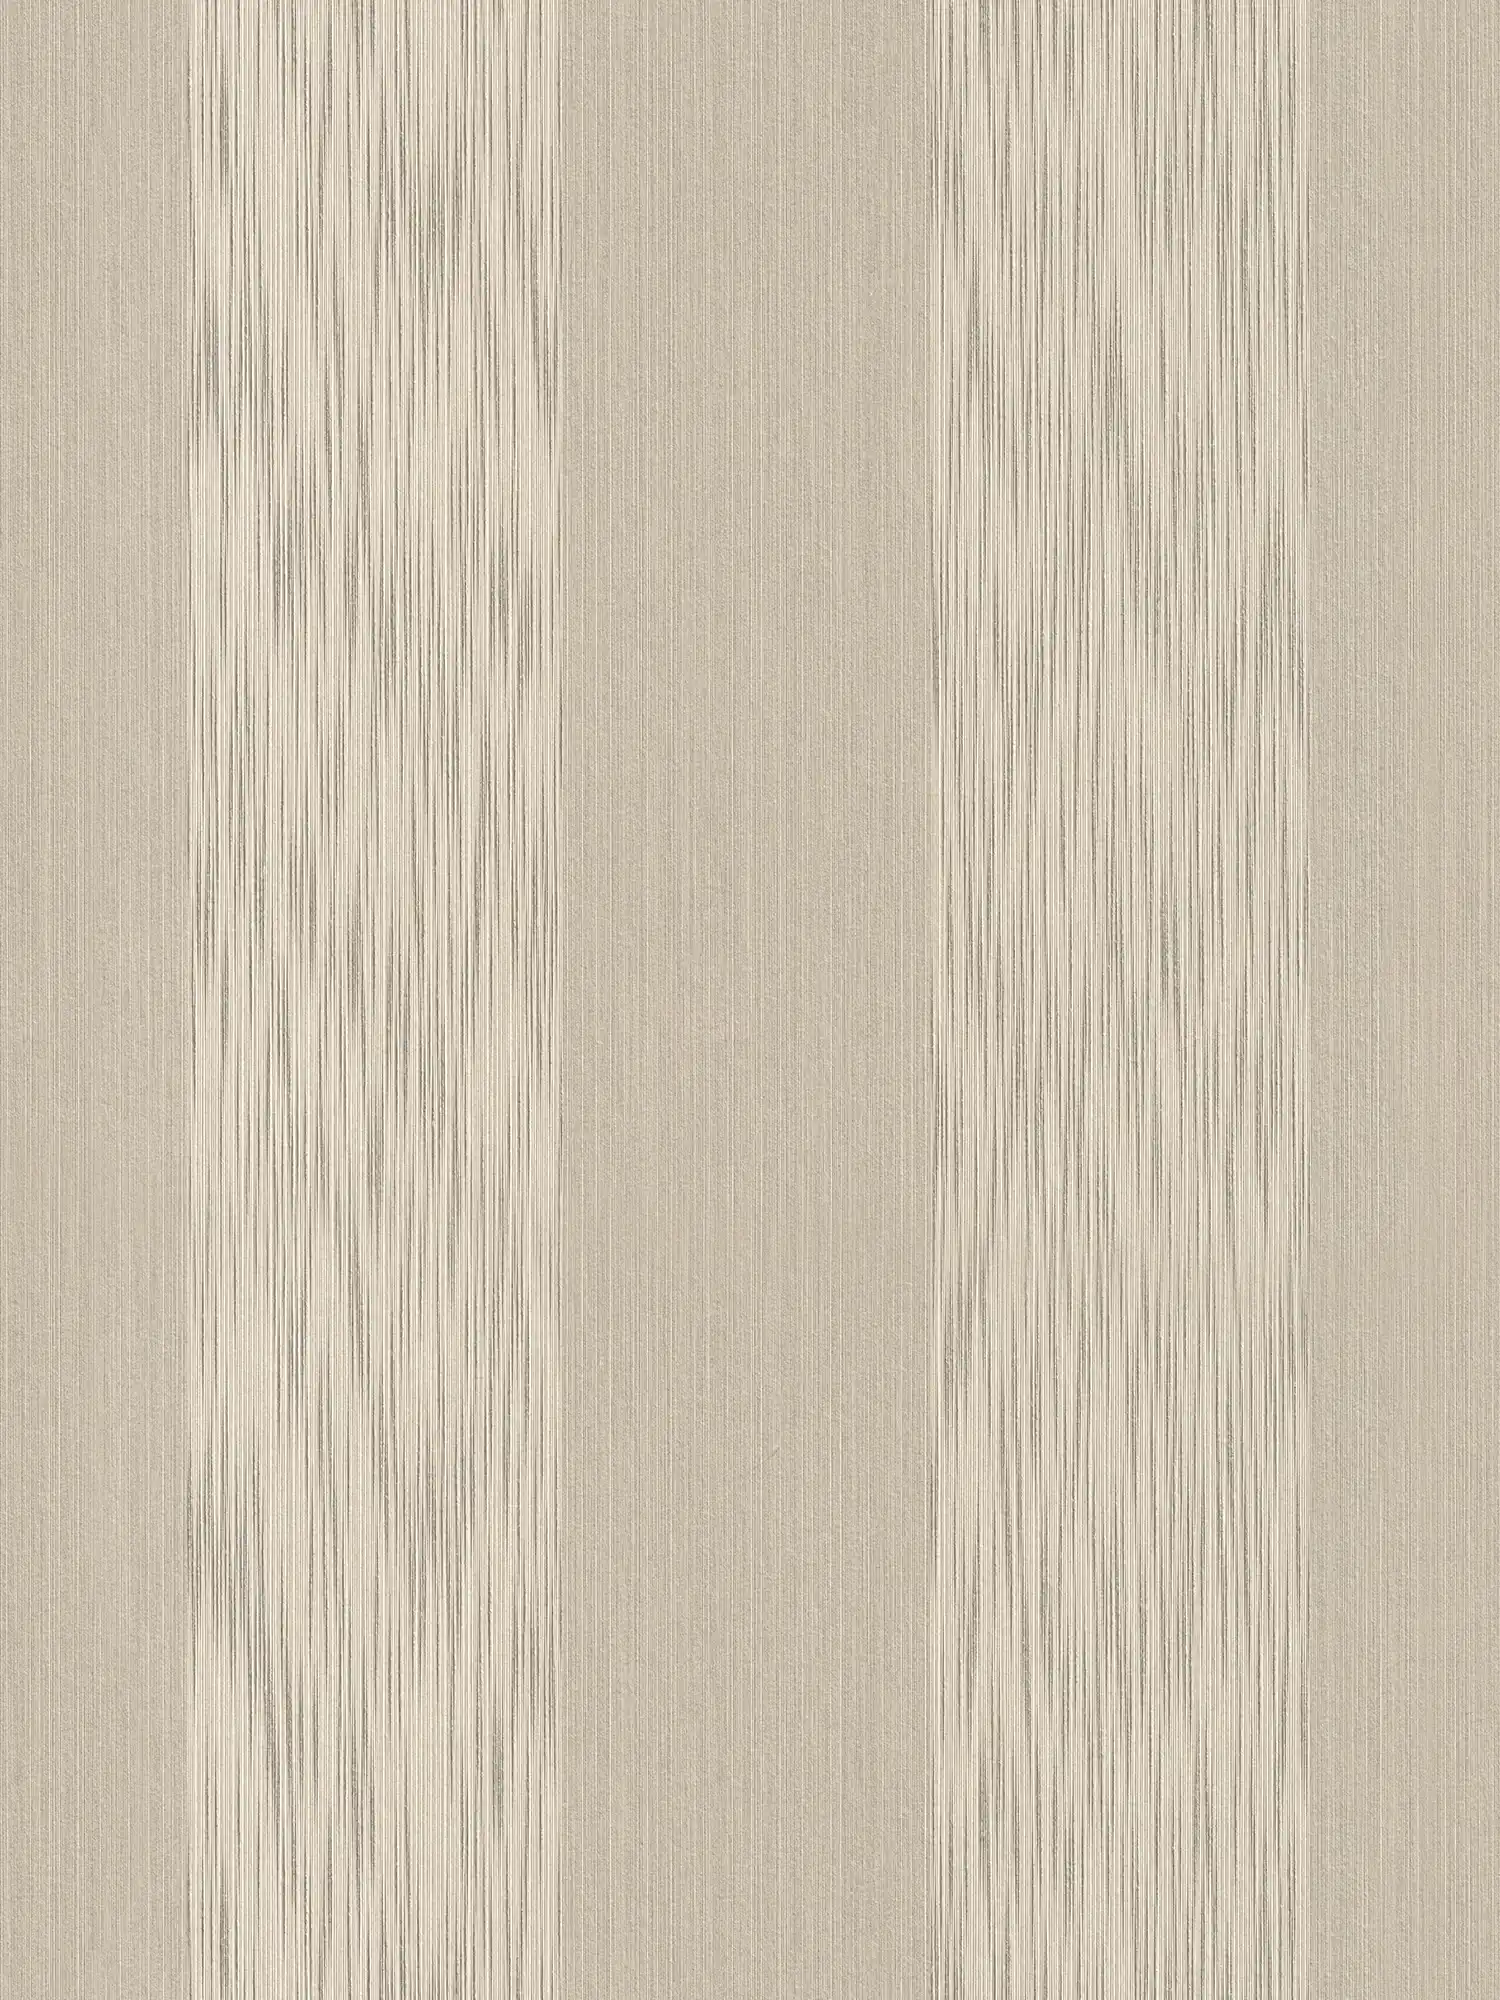 Non-woven wallpaper with textile texture & tone-on-tone stripe pattern - beige
